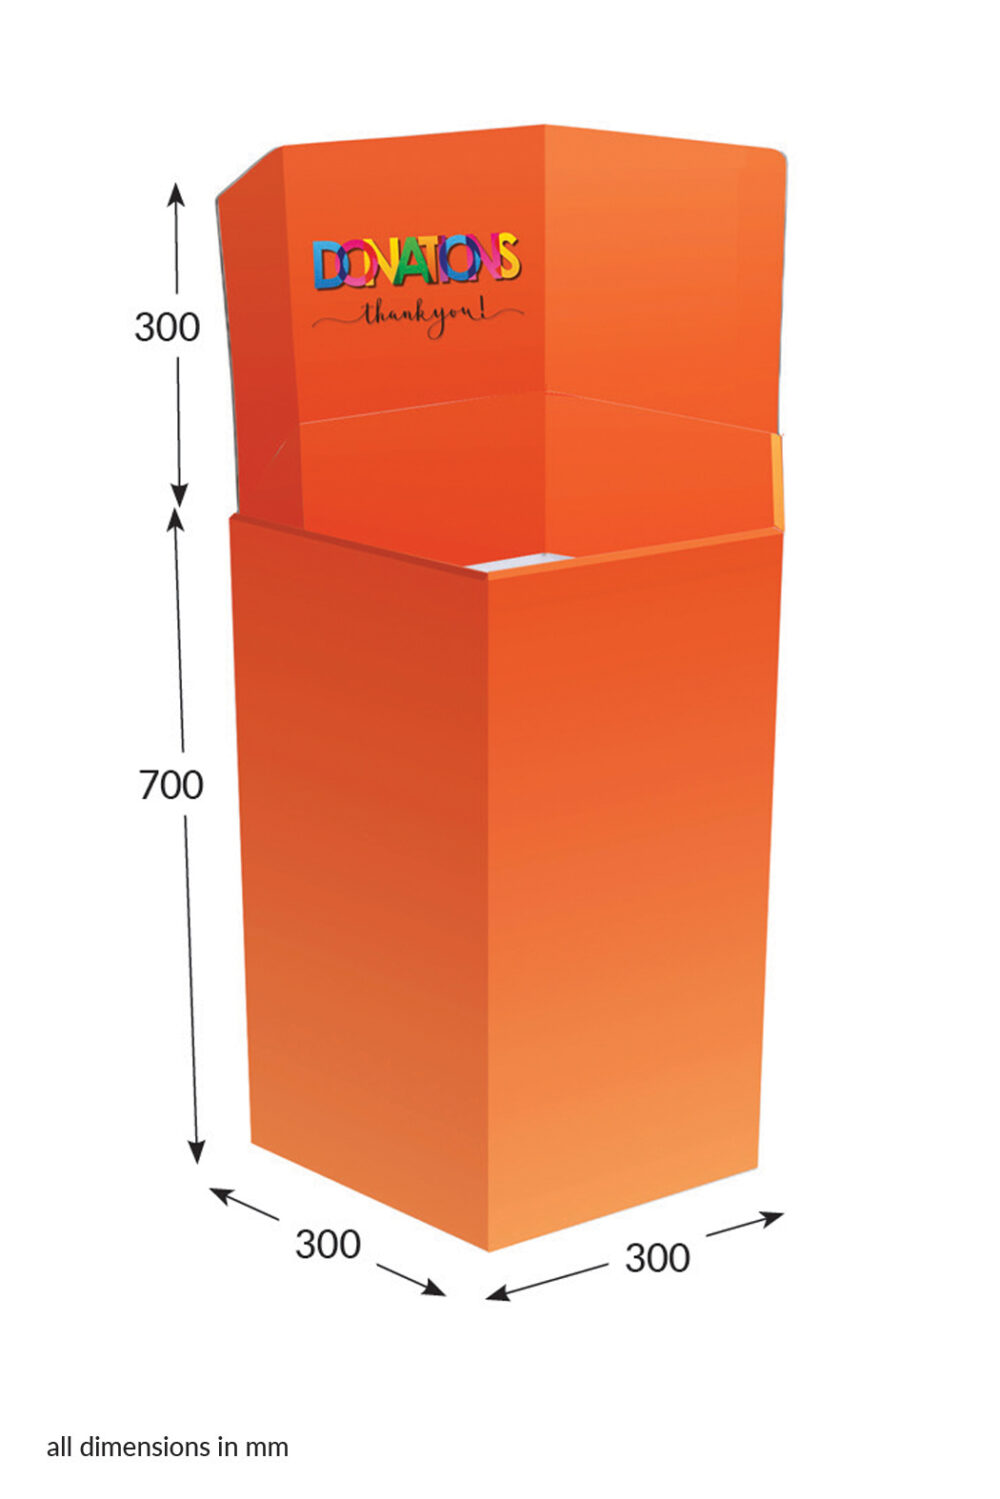 Featured image for “Large Hexagonal Dump Bin - Donations (Orange)”